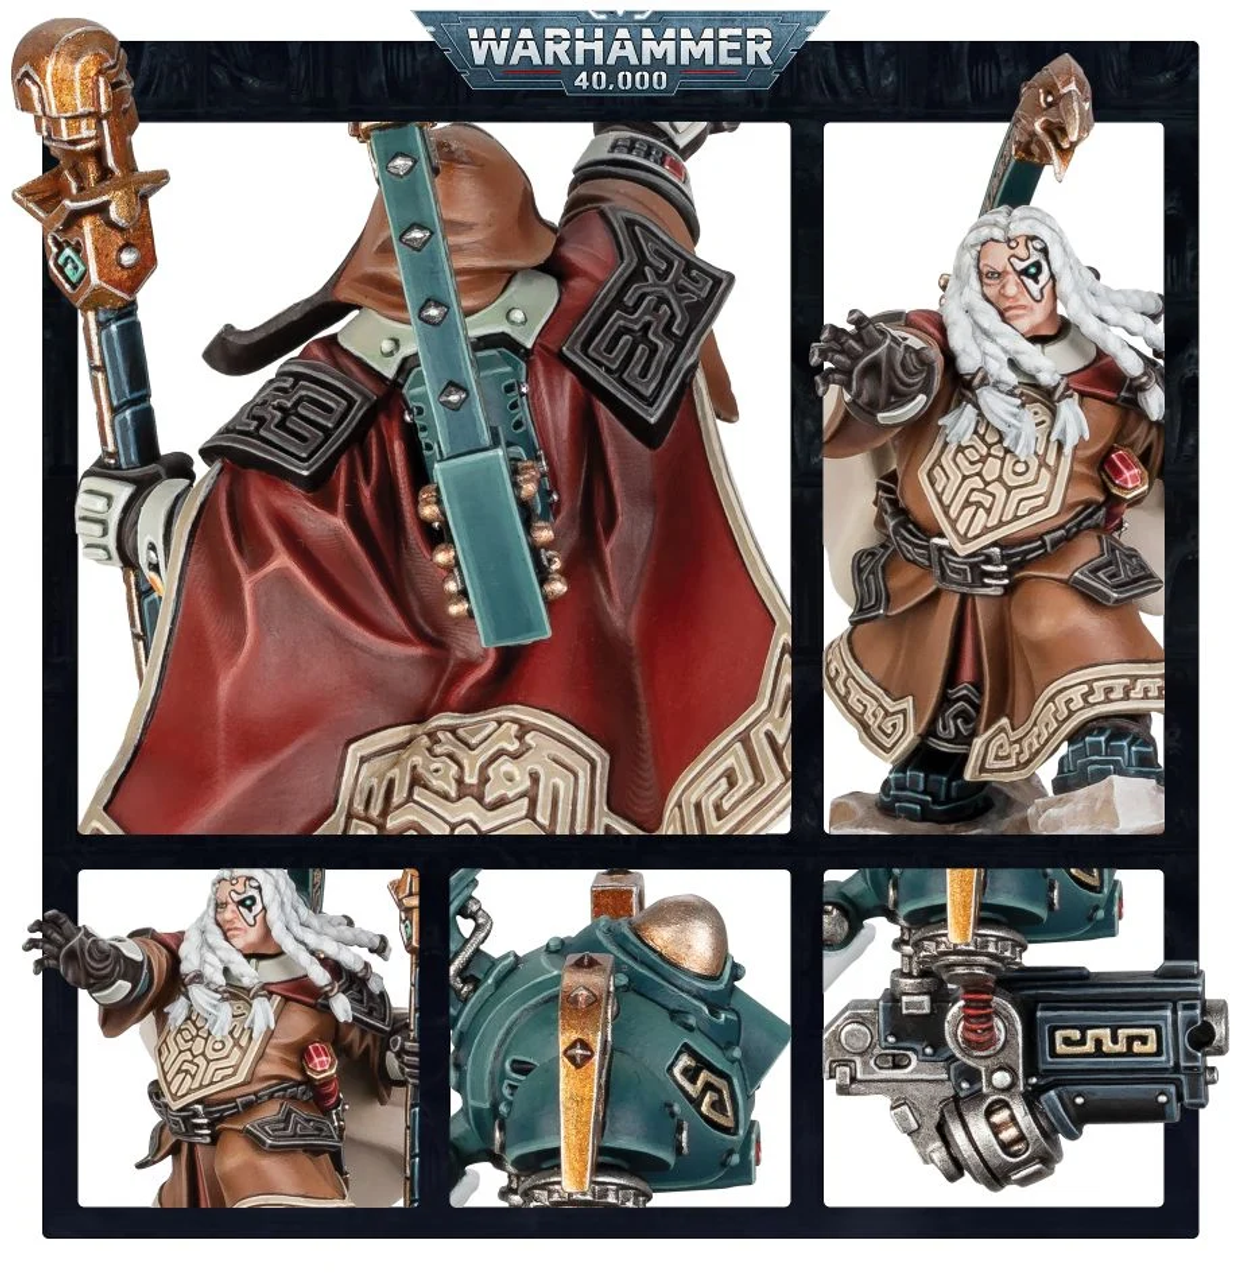 Games Workshop Leagues of Votann The Ancestors' Wrath Einhyr Champion  Limited Edition - Wonderland Models, GW69-18